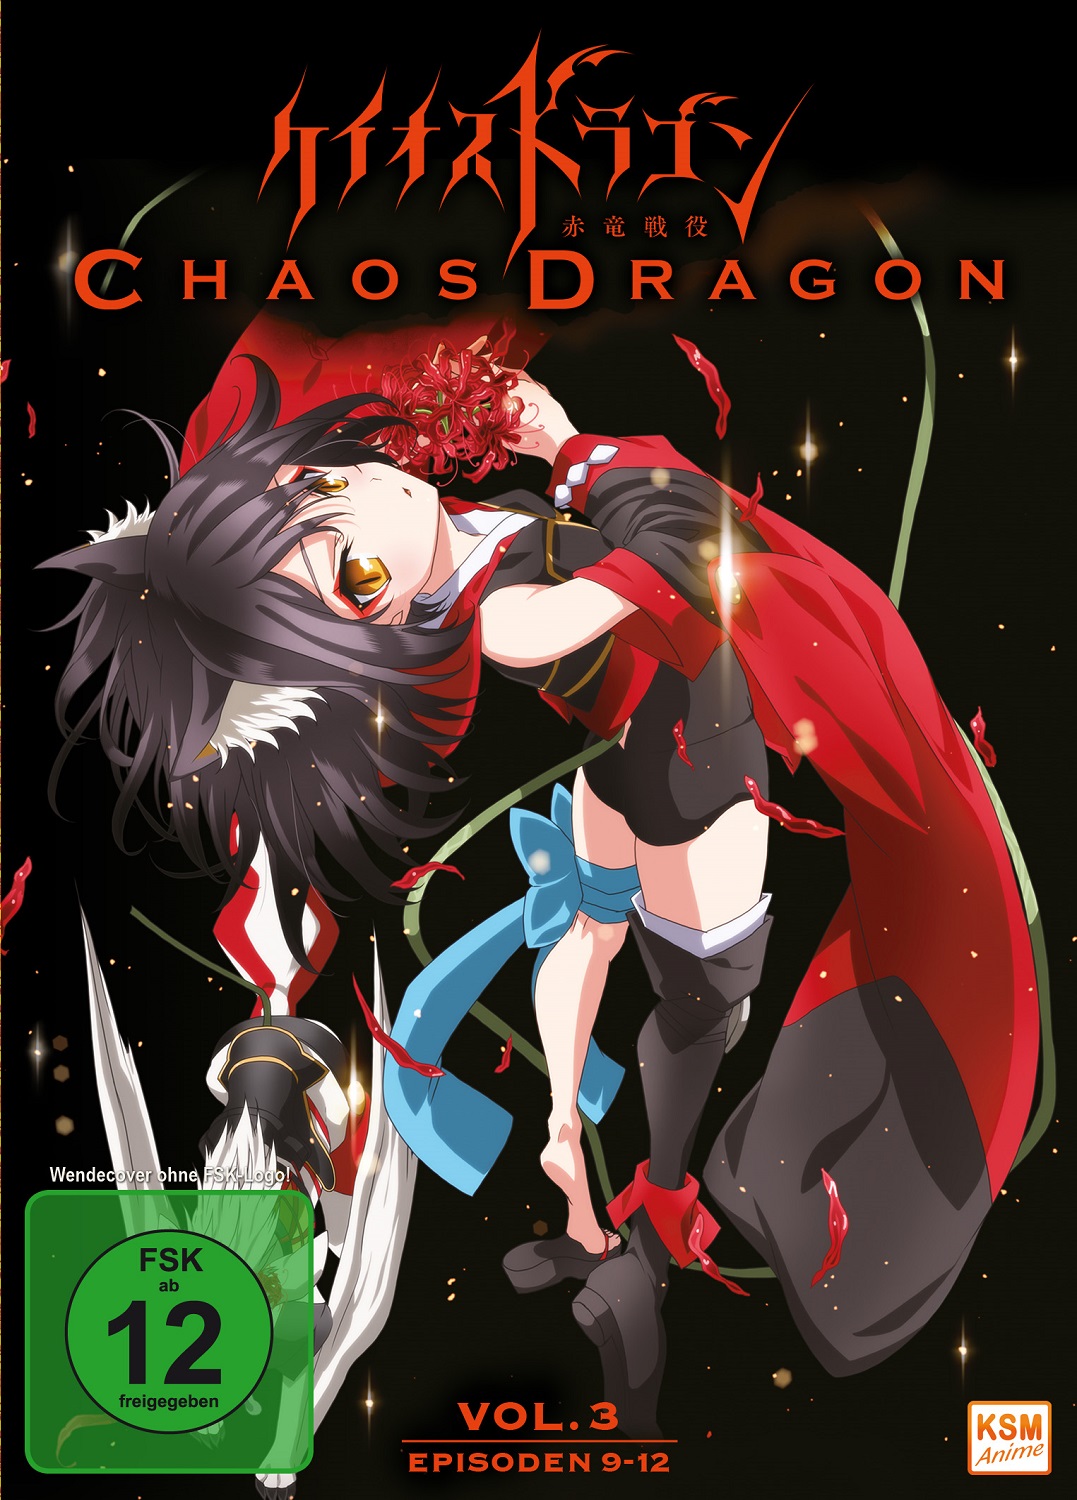 Chaos Dragon - Volume 3: Episode 09-12 [DVD]